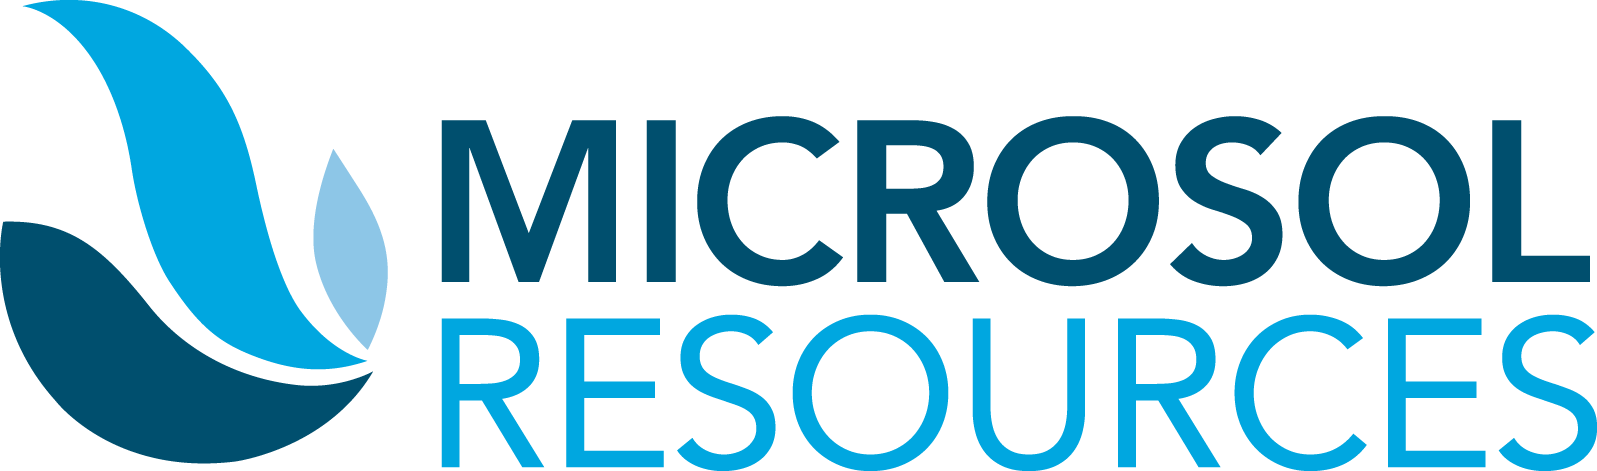 microsol resources logo